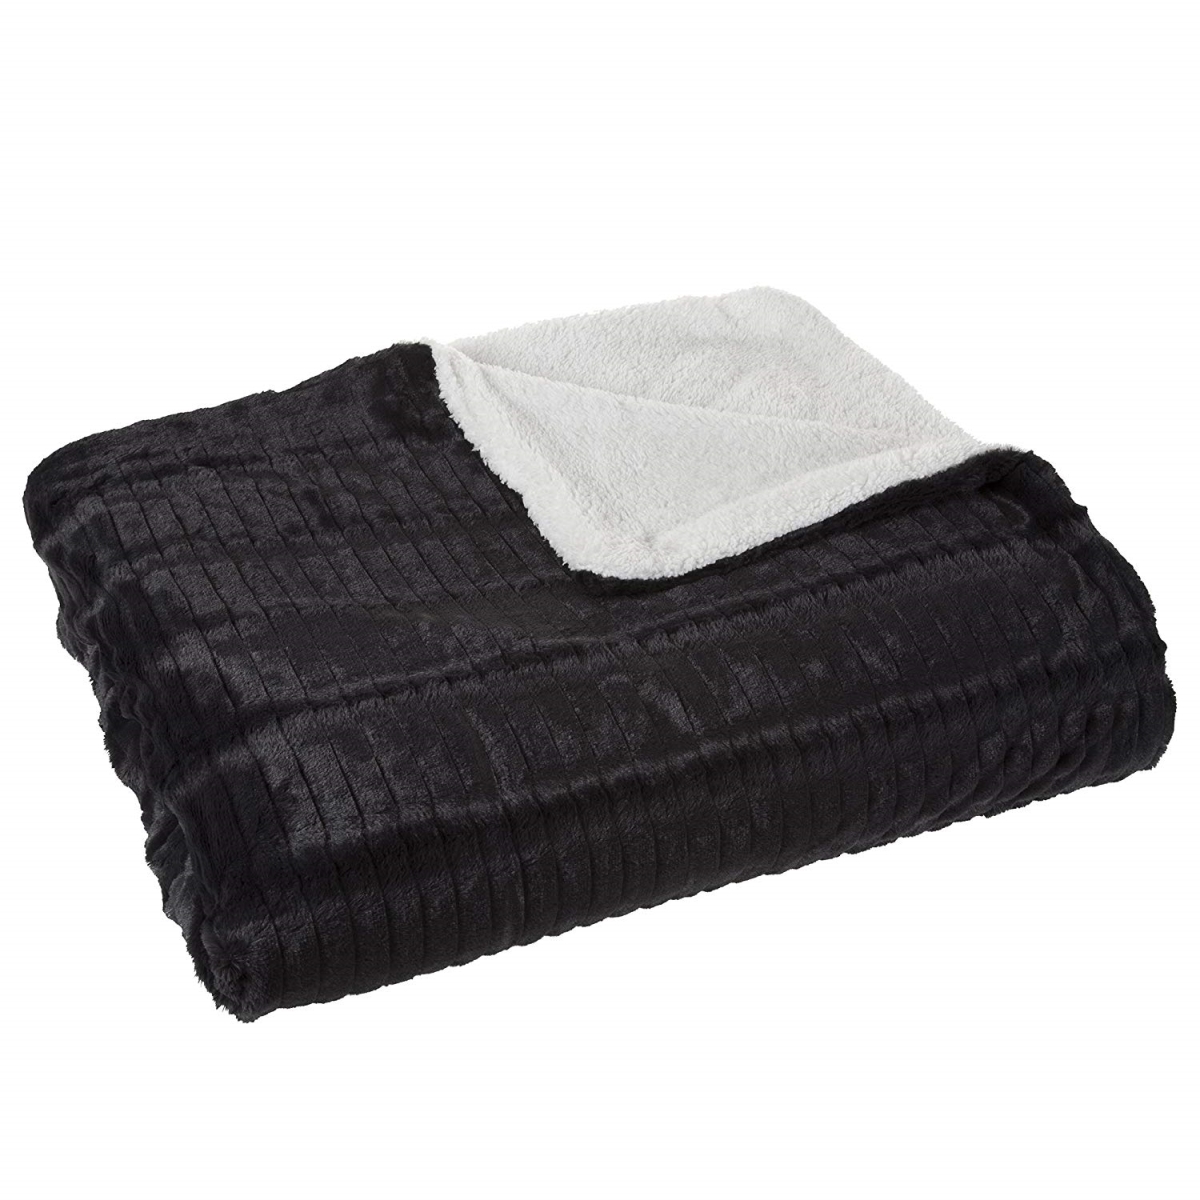 61a-01107 Fleece & Sherpa Blanket, King Size - Smoky Black